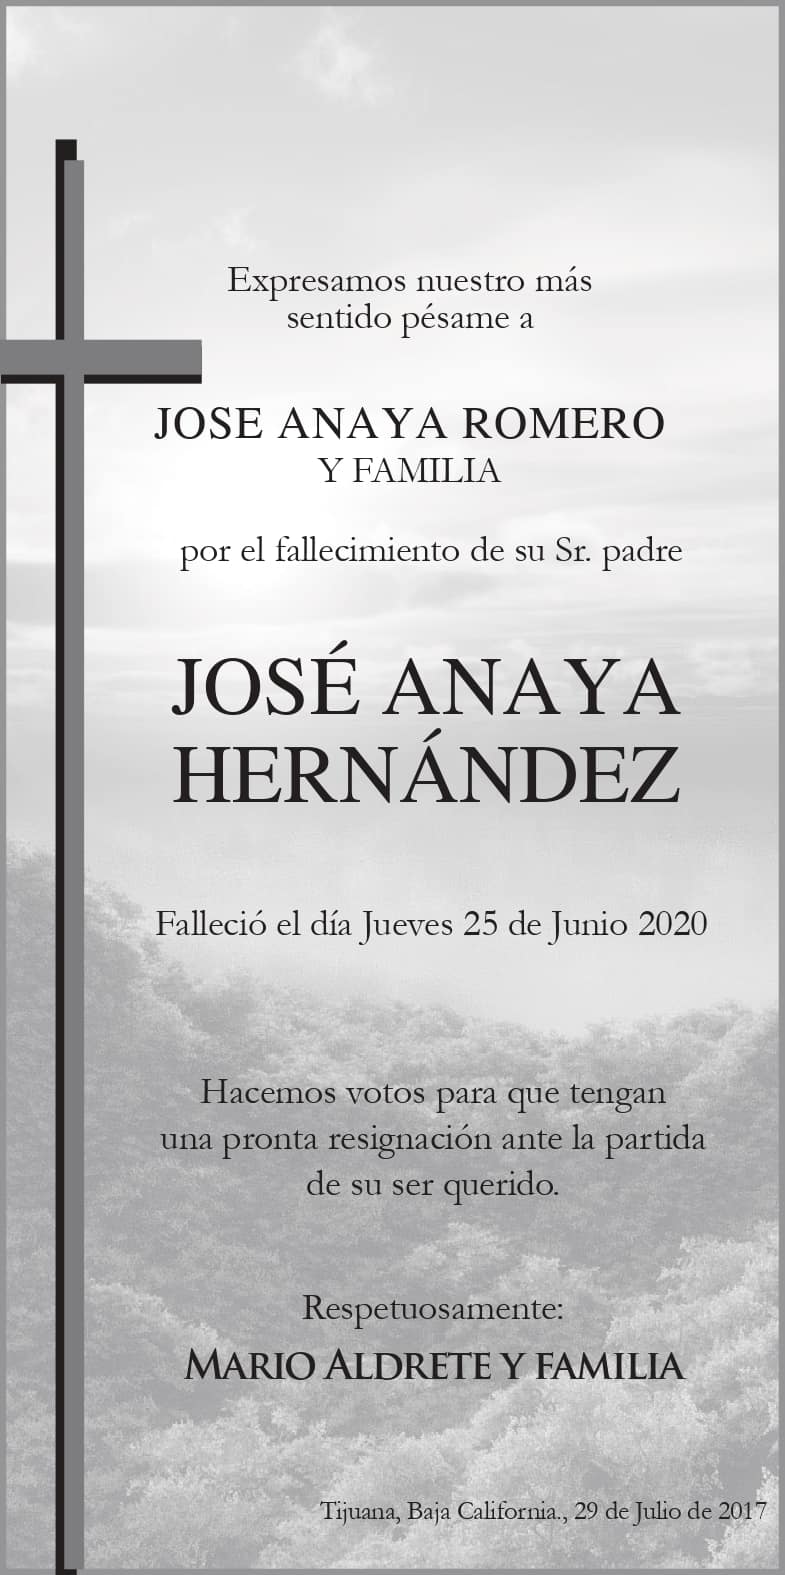 José Anaya Hernández